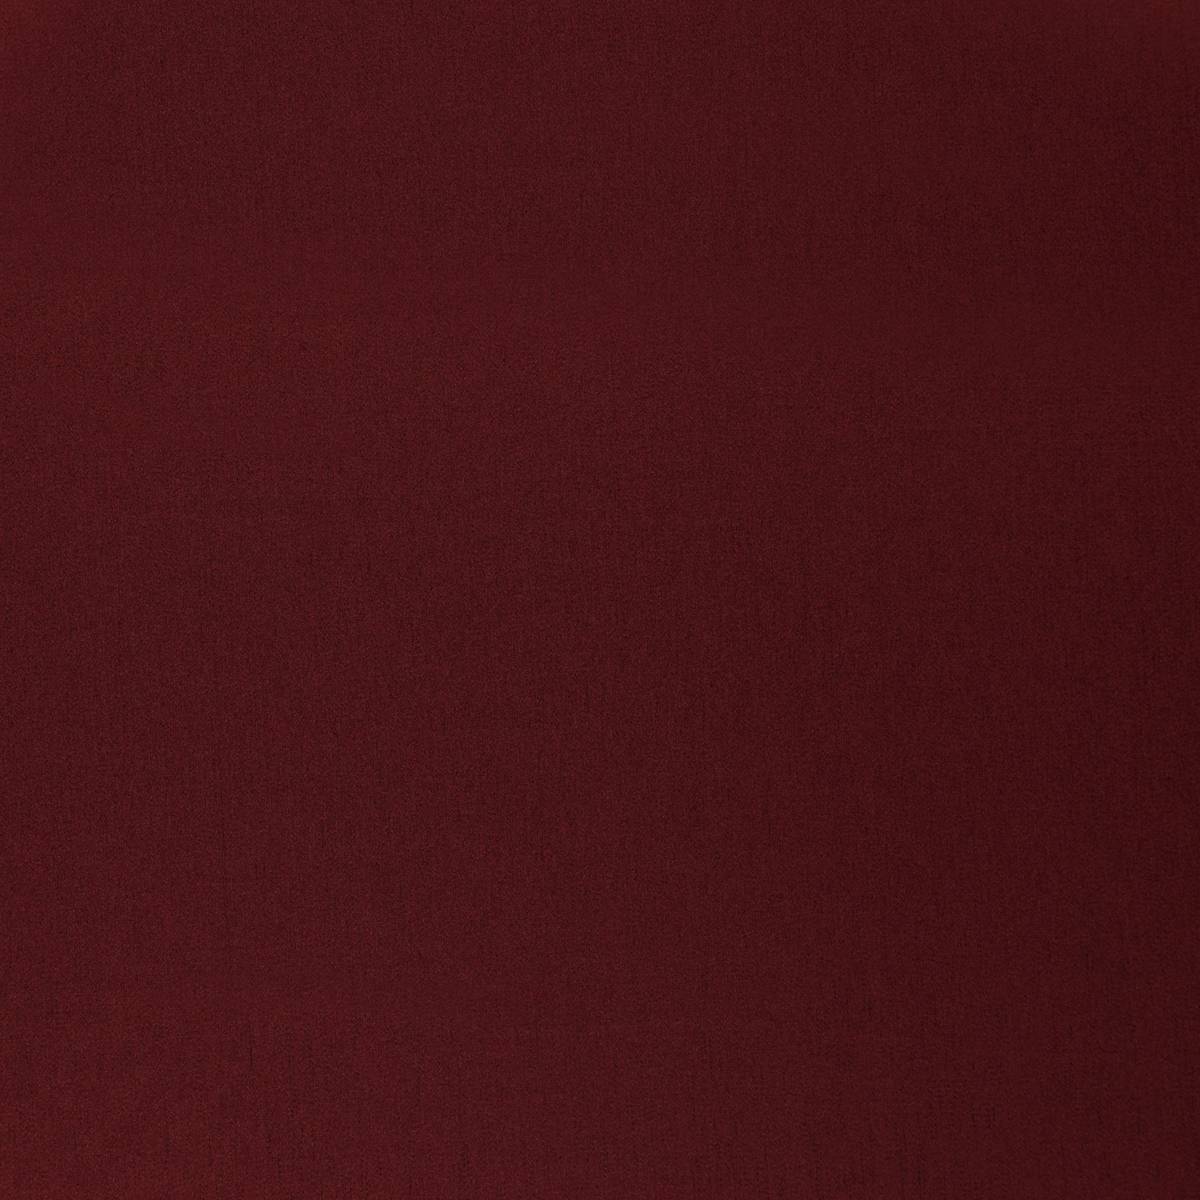 Sumatra Burgundy Fabric by Harlequin